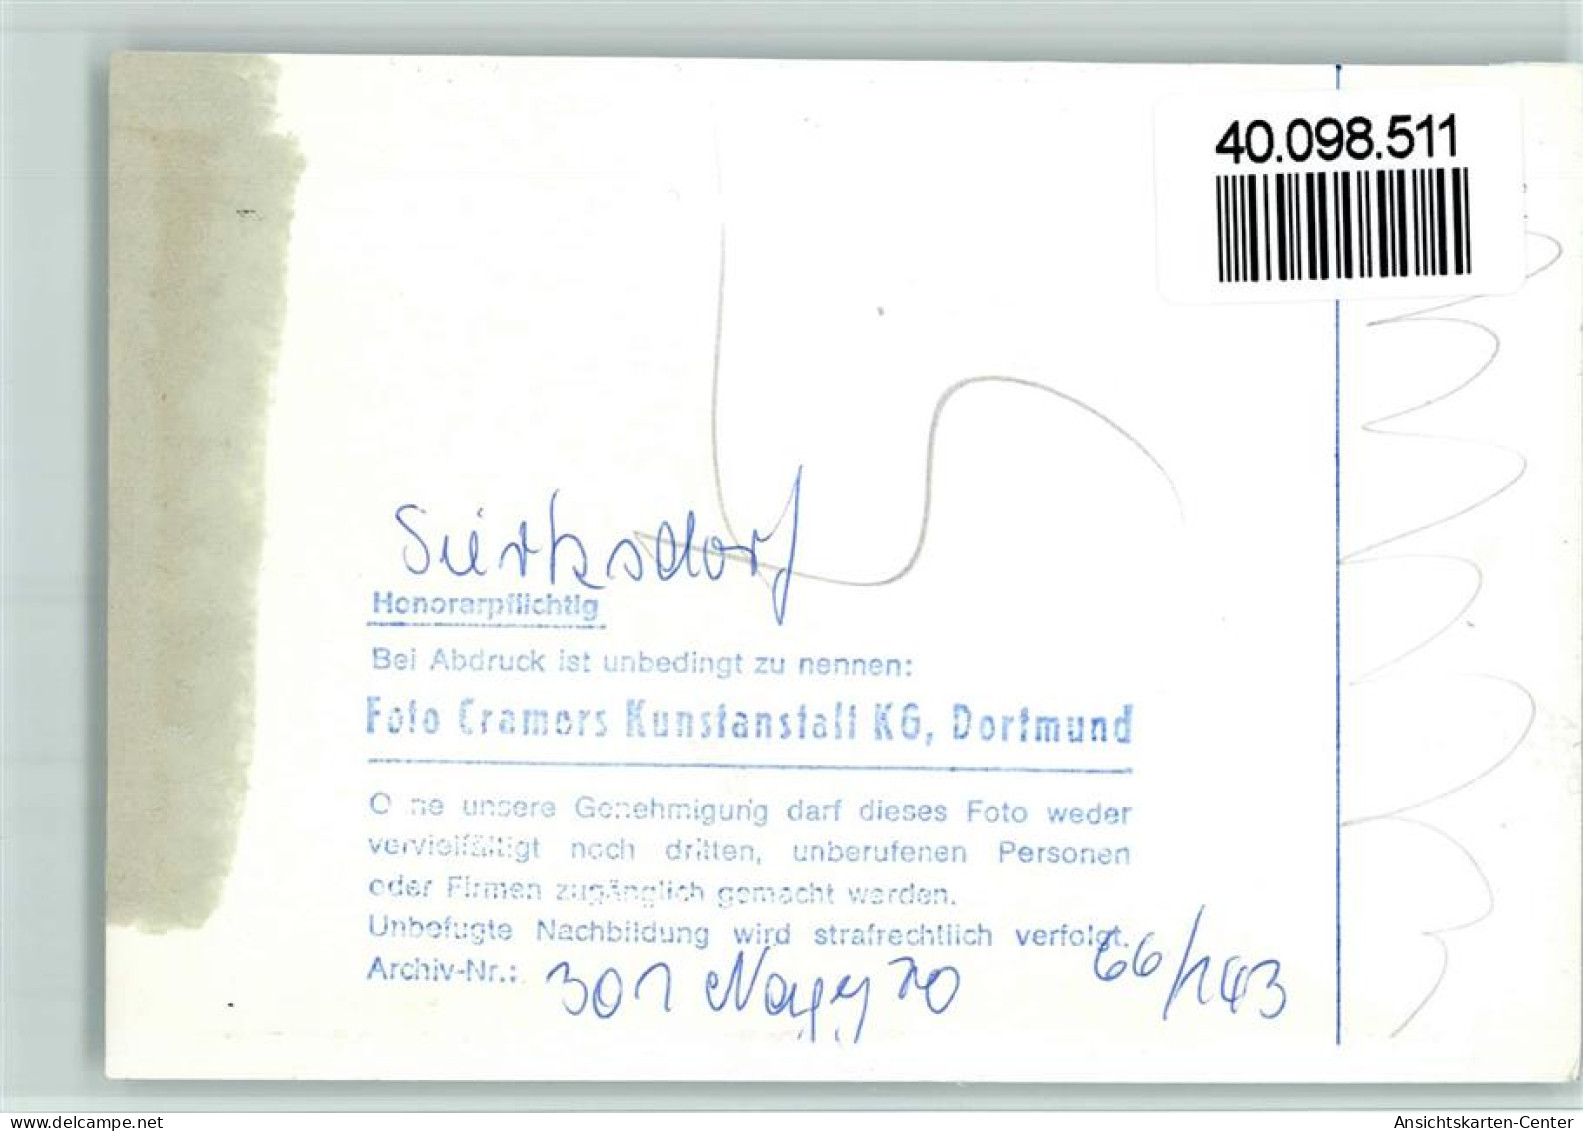 40098511 - Sierksdorf - Sierksdorf